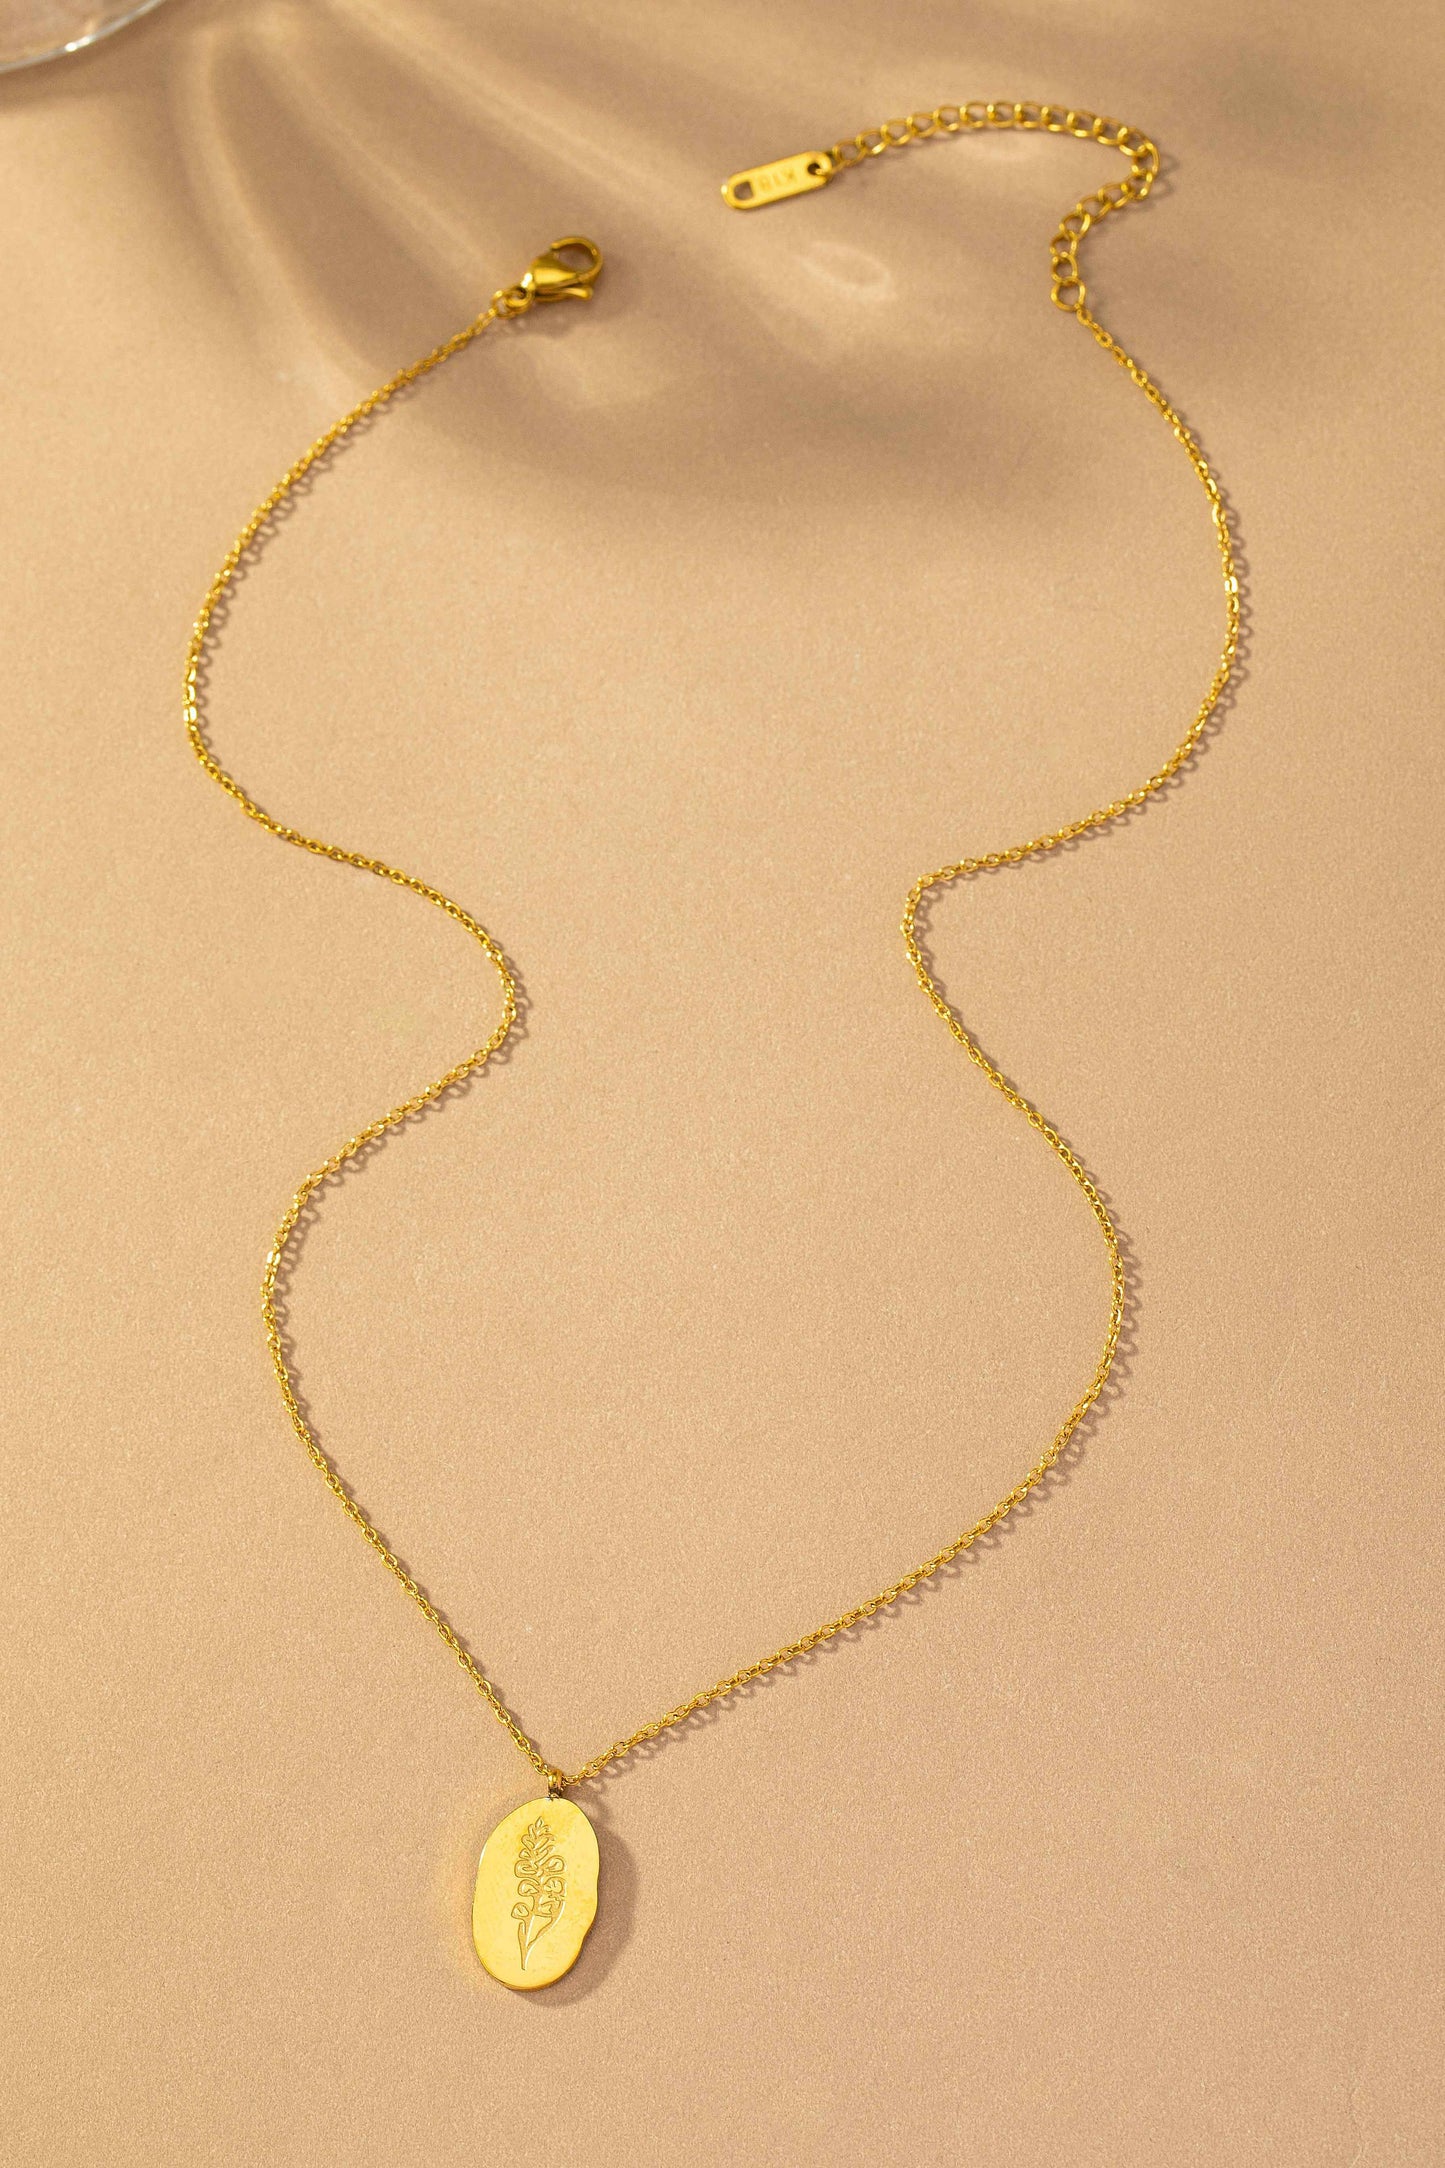 Birth Month Flower Pendant Necklace